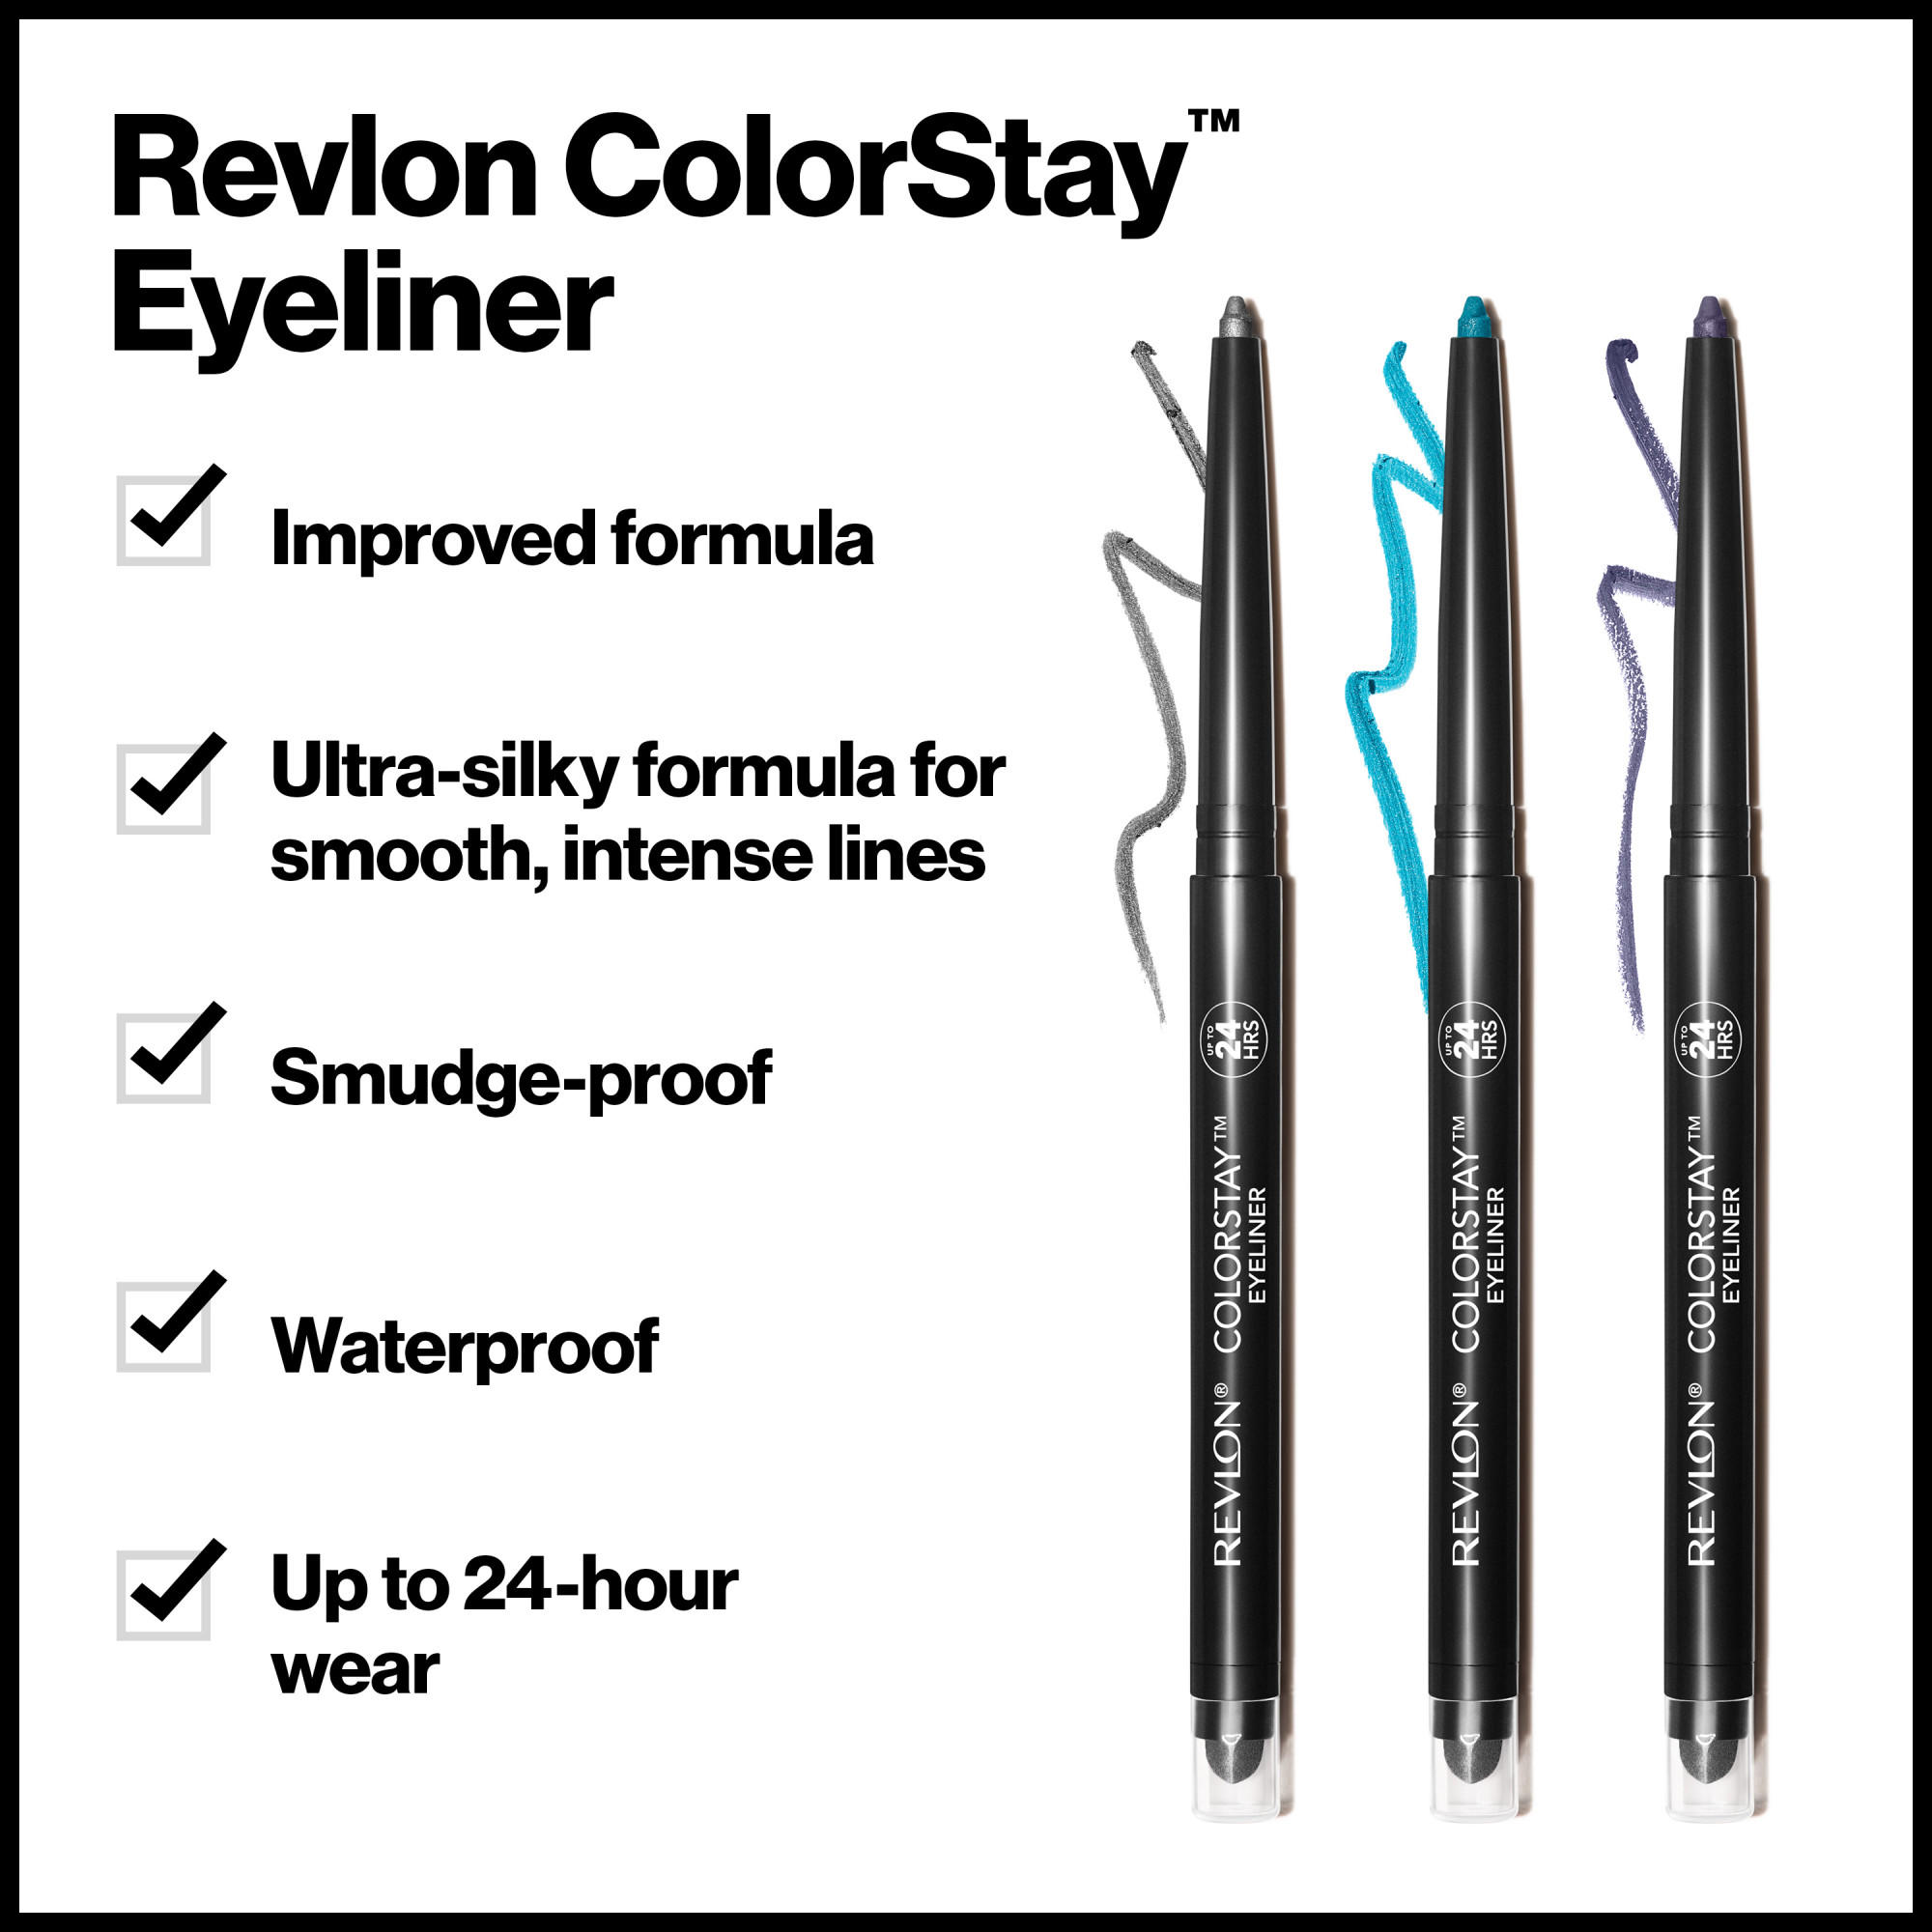 Revlon ColorStay Waterproof Eyeliner Pencil, 24HR Wear, Built-in Sharpener, 204 Charcoal, 0.01 oz - image 5 of 9